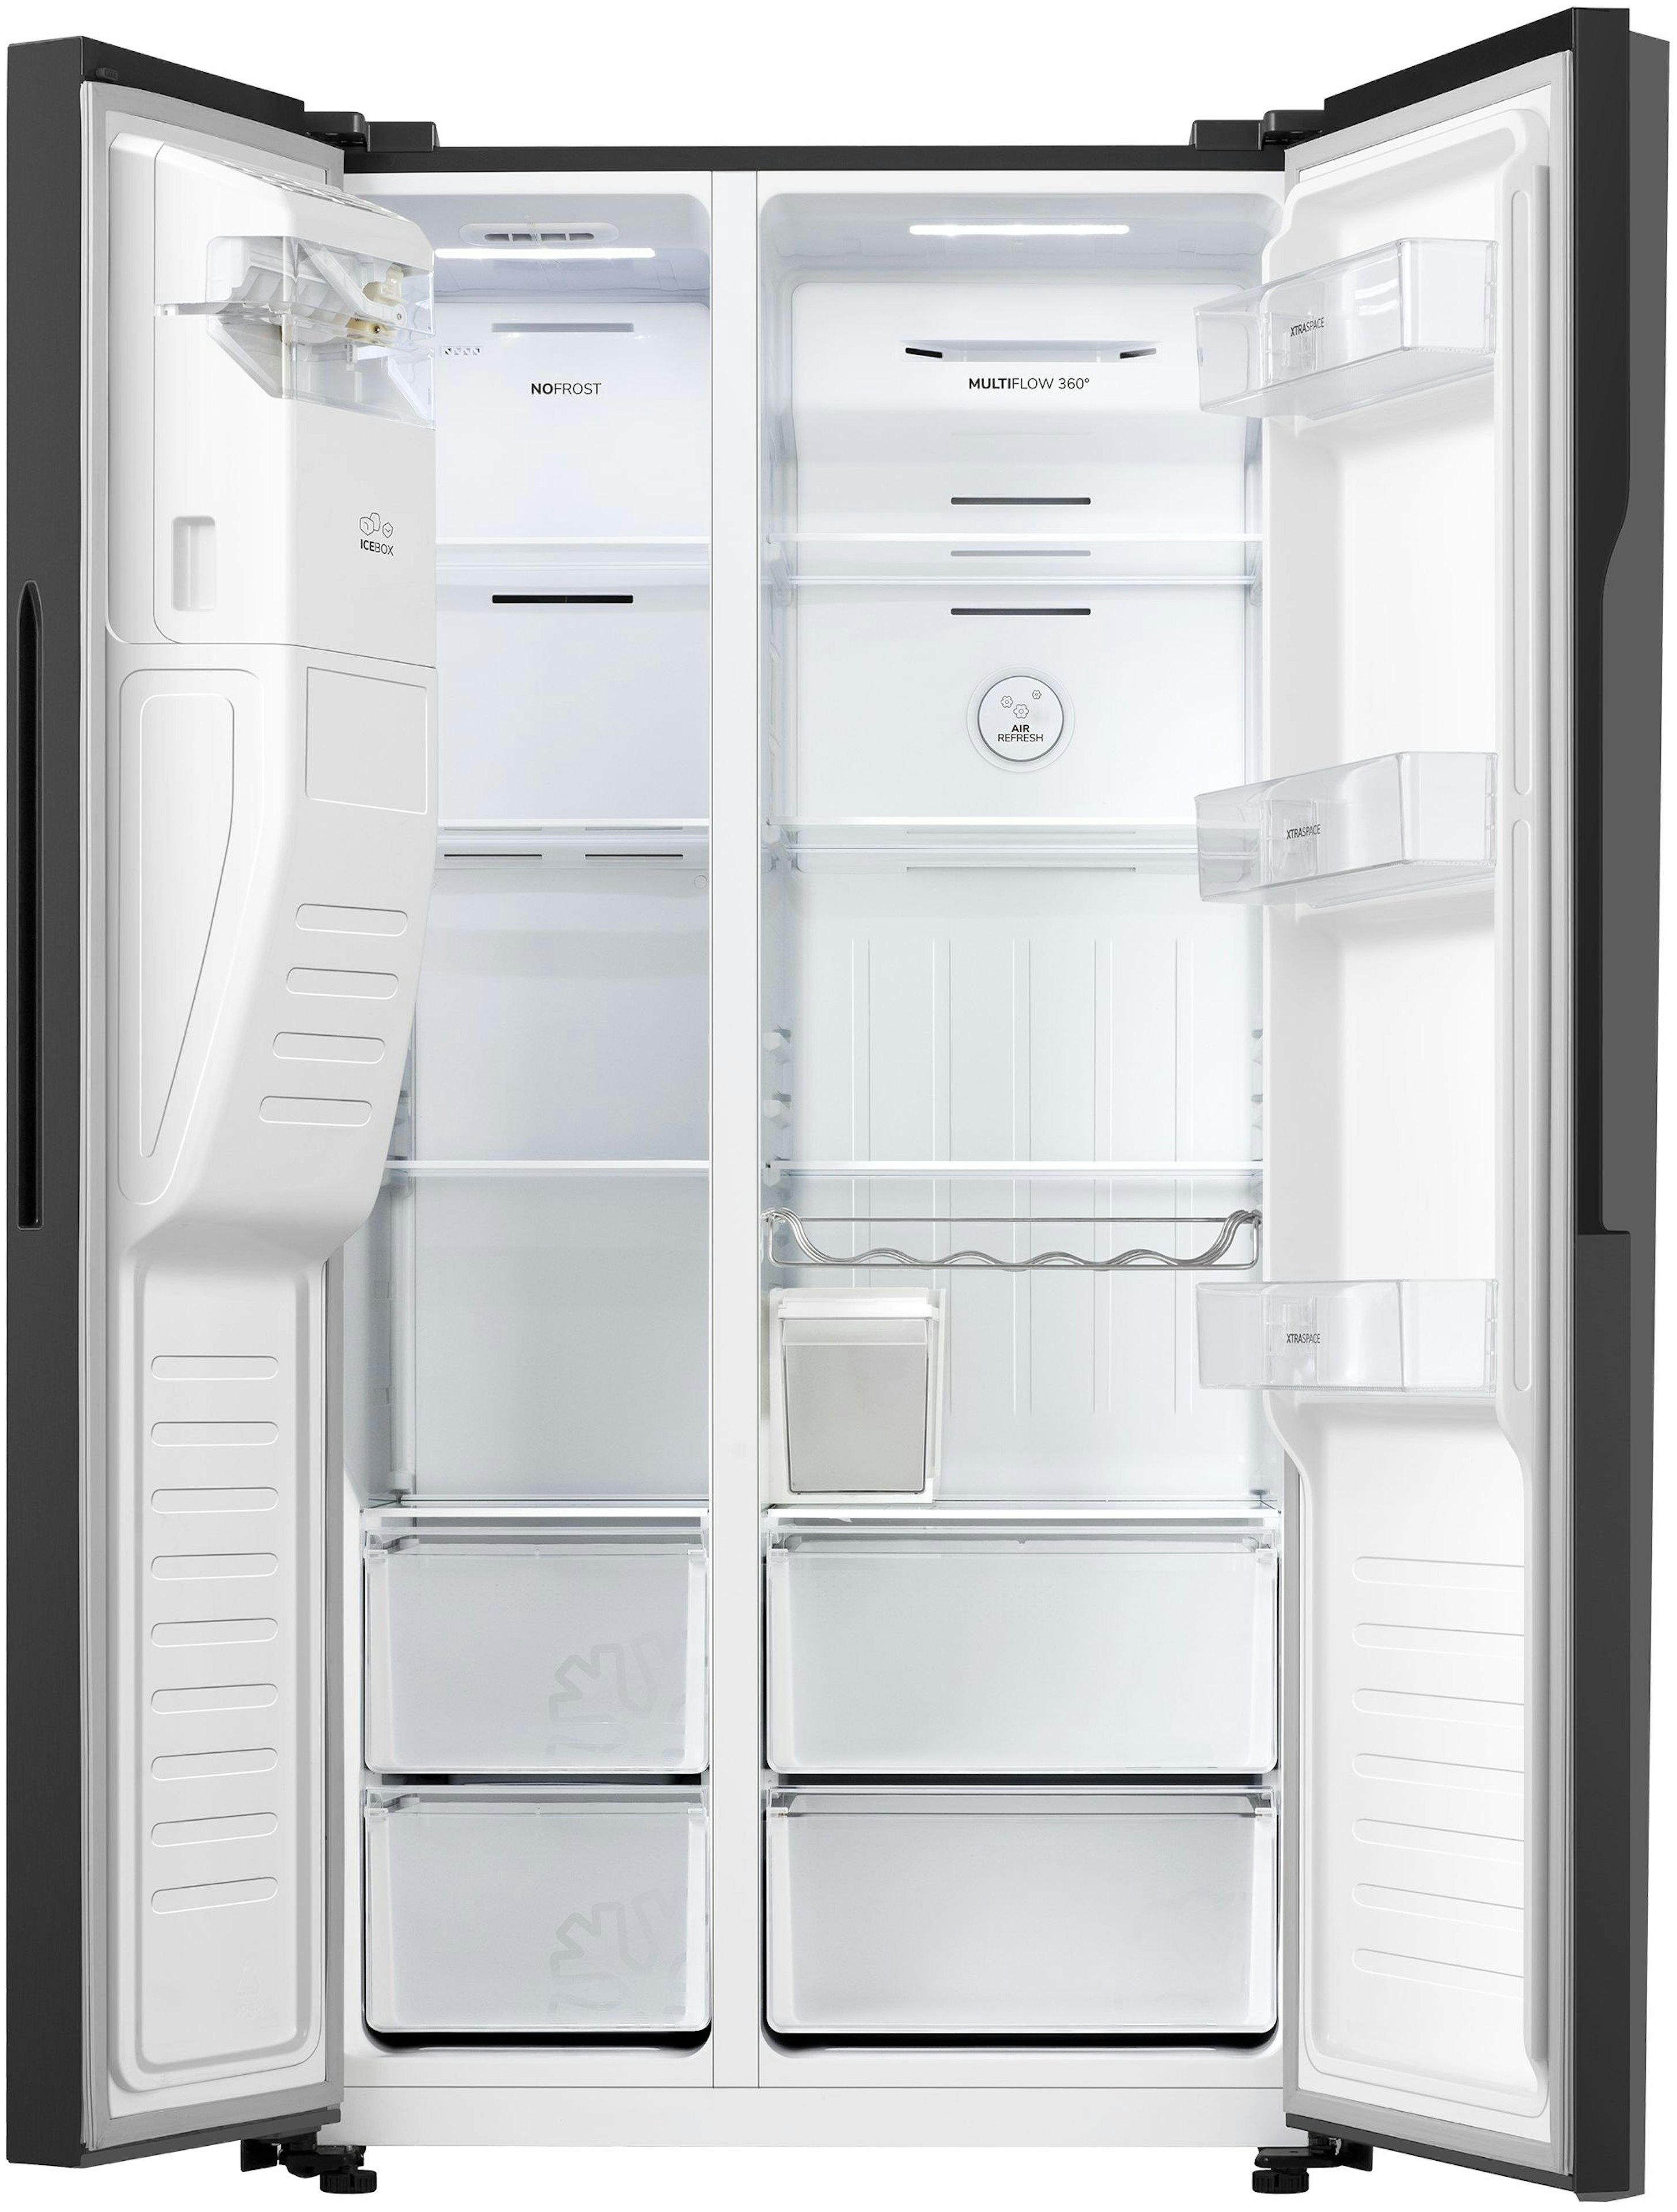 Etna AKV578IZWA vrijstaand koelkast afbeelding 5